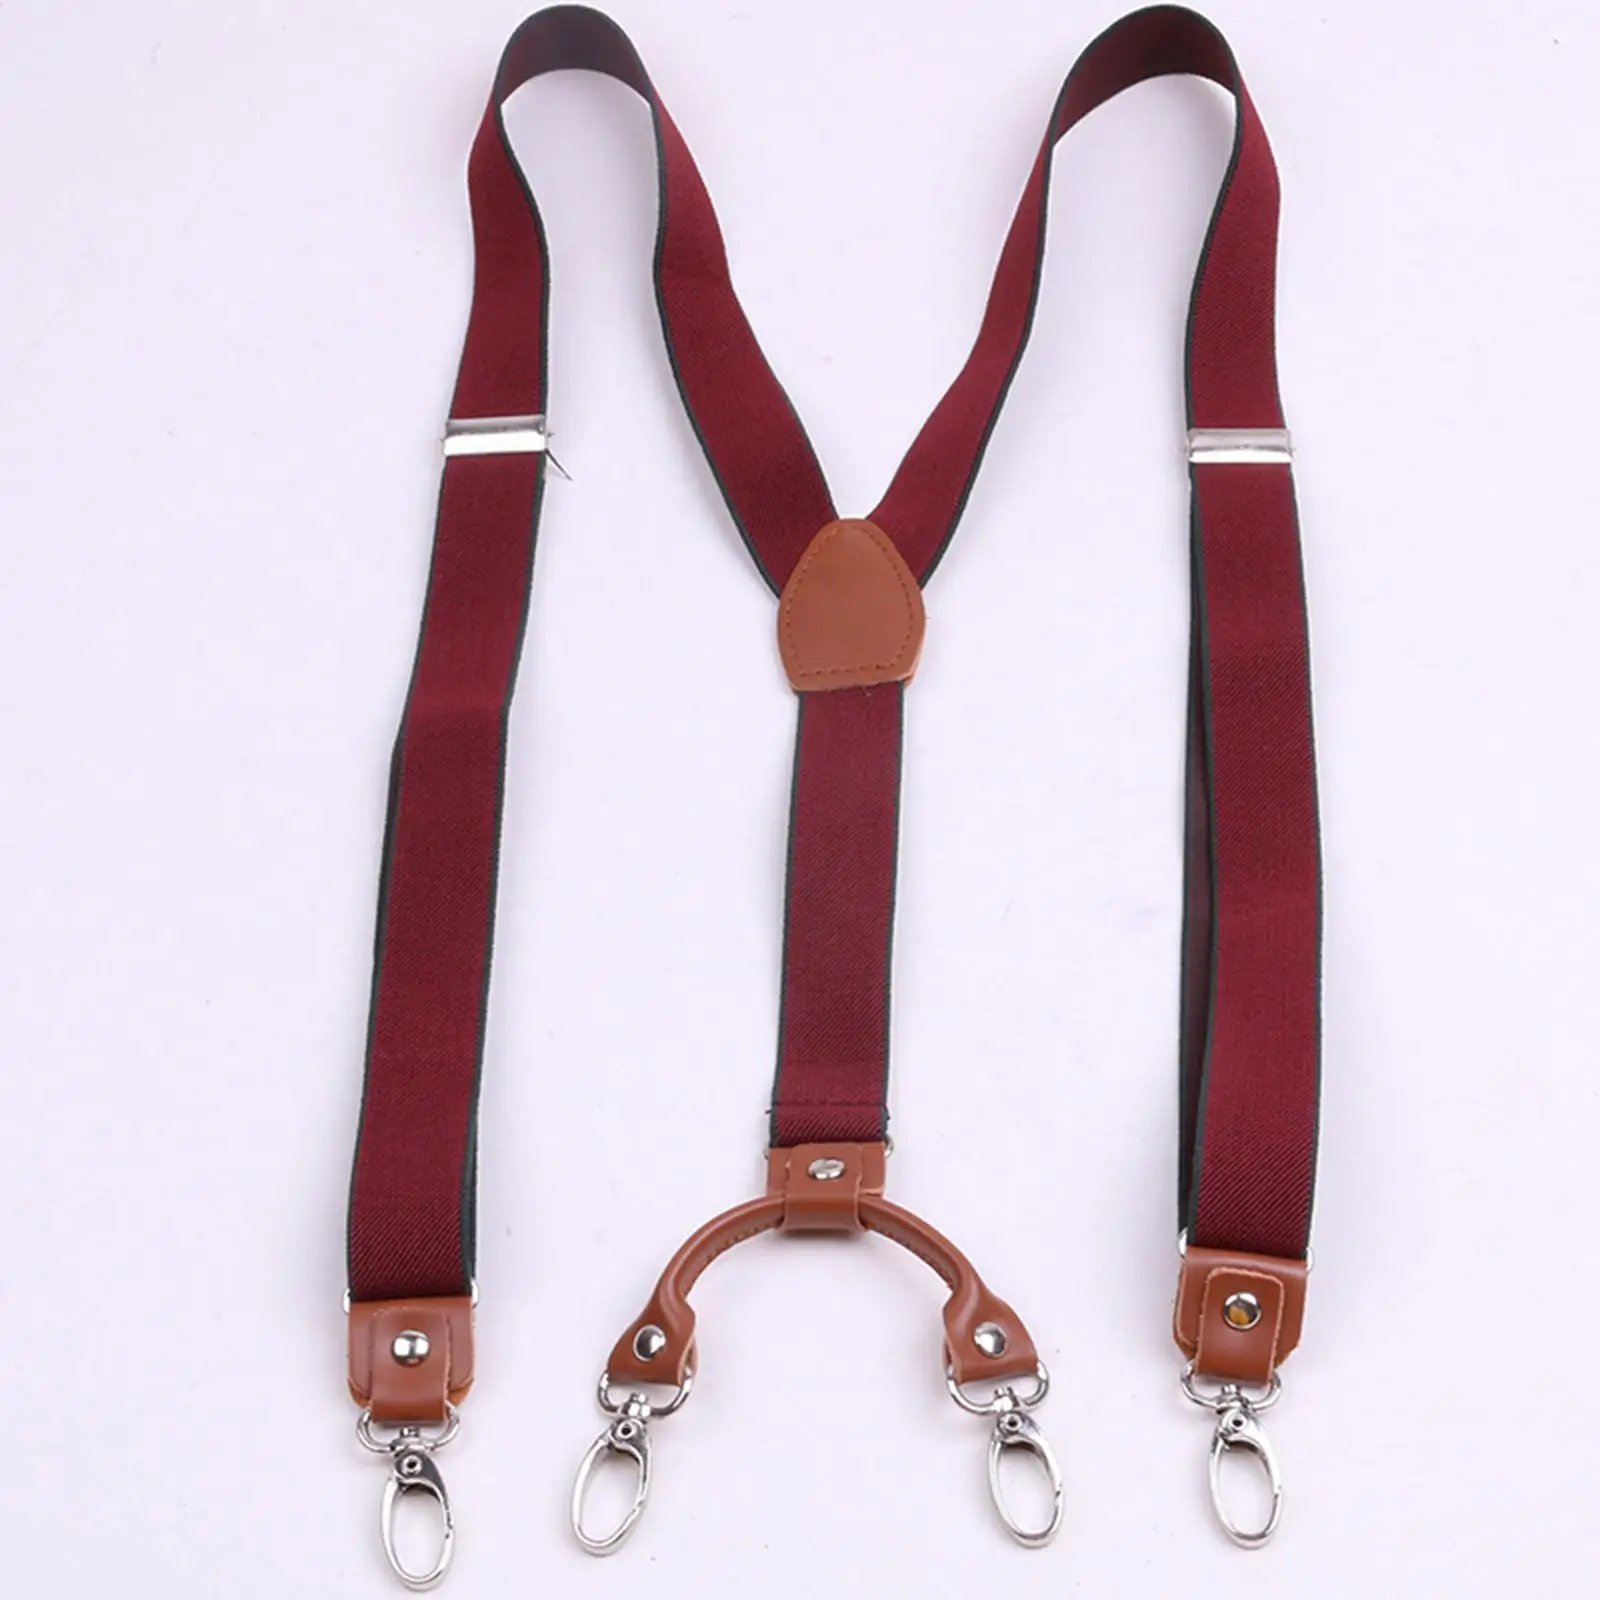 Suspenders for Men with 4 Swivel Hooks Elastic Y Back Adjustable Heavy Duty 1 inch Wide Belt Loops  Unisex for Work Casual